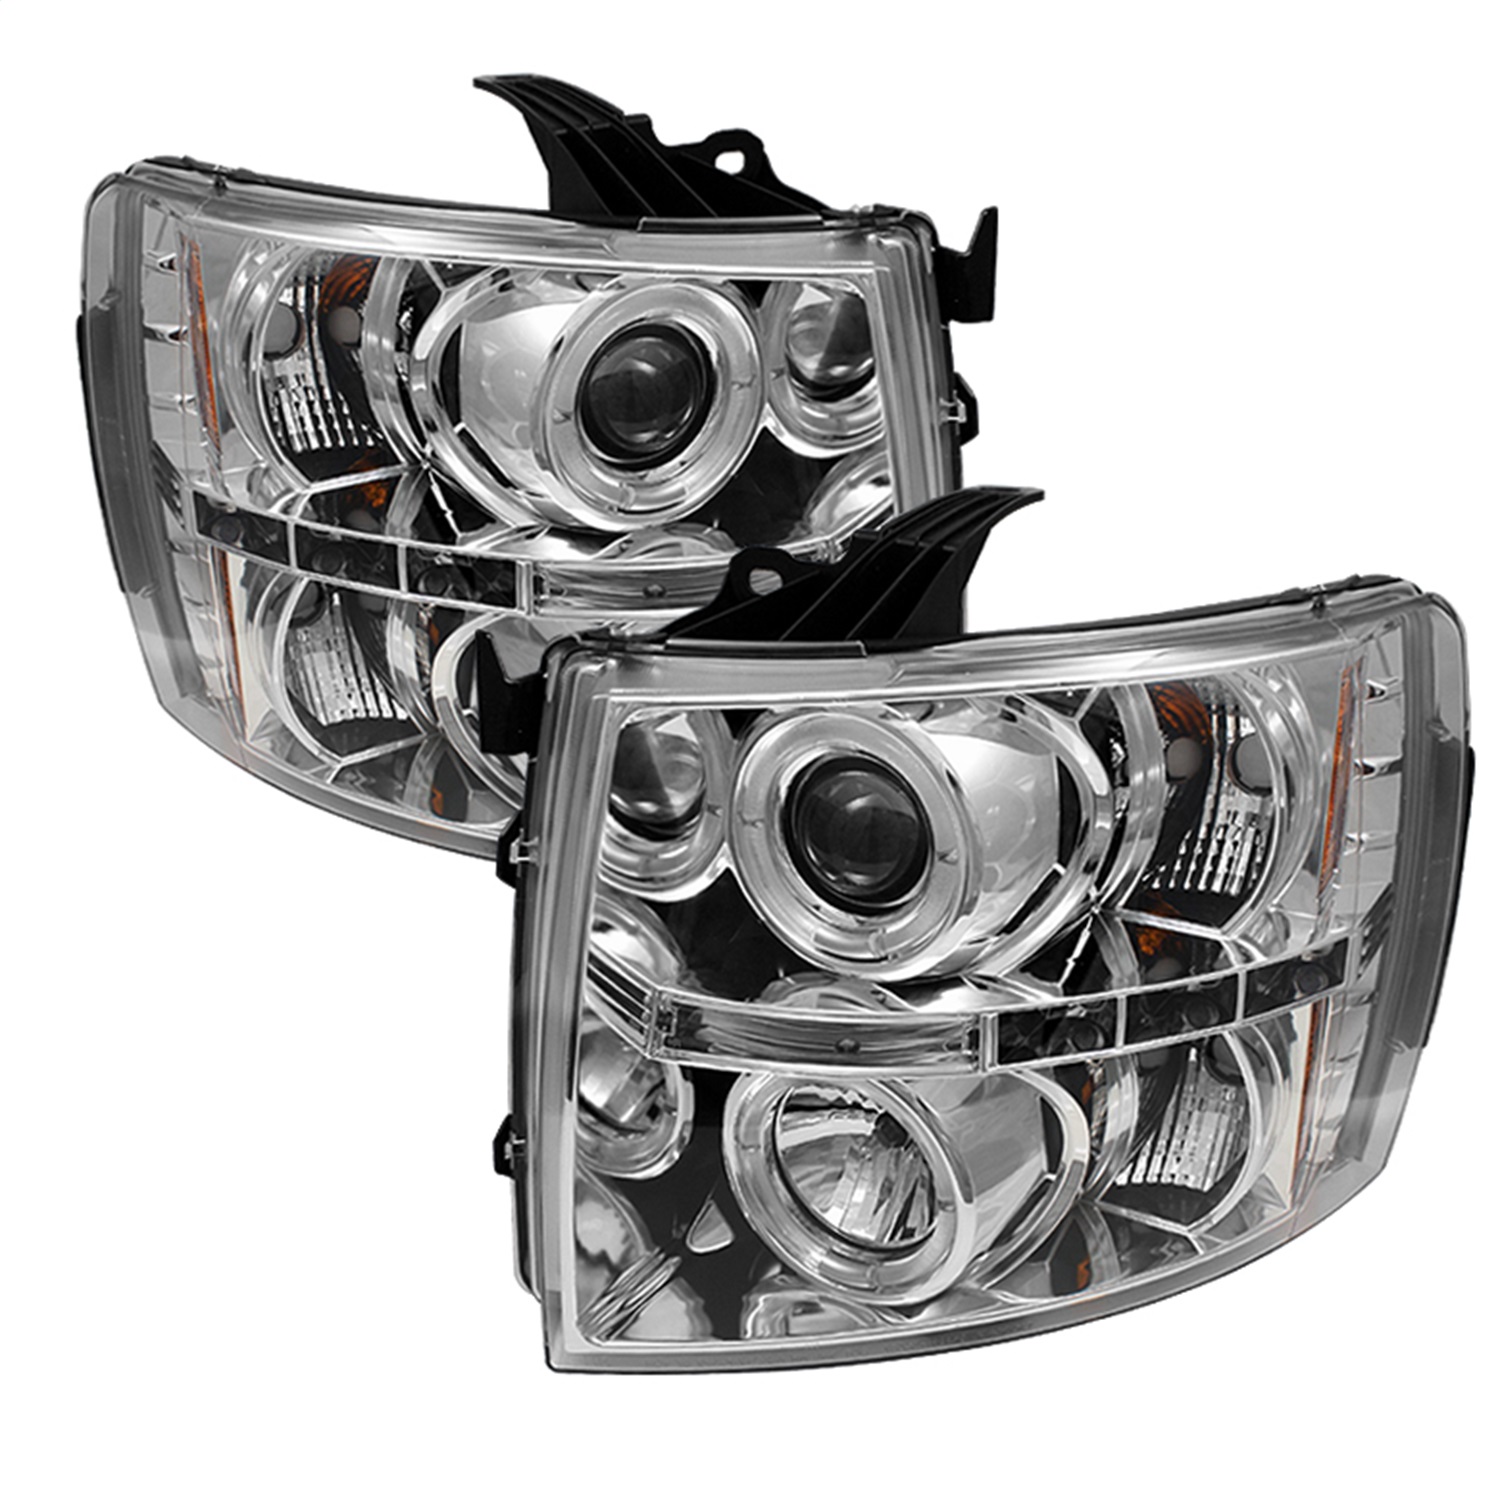 Spyder Auto 5009500 Halo LED Projector Headlights